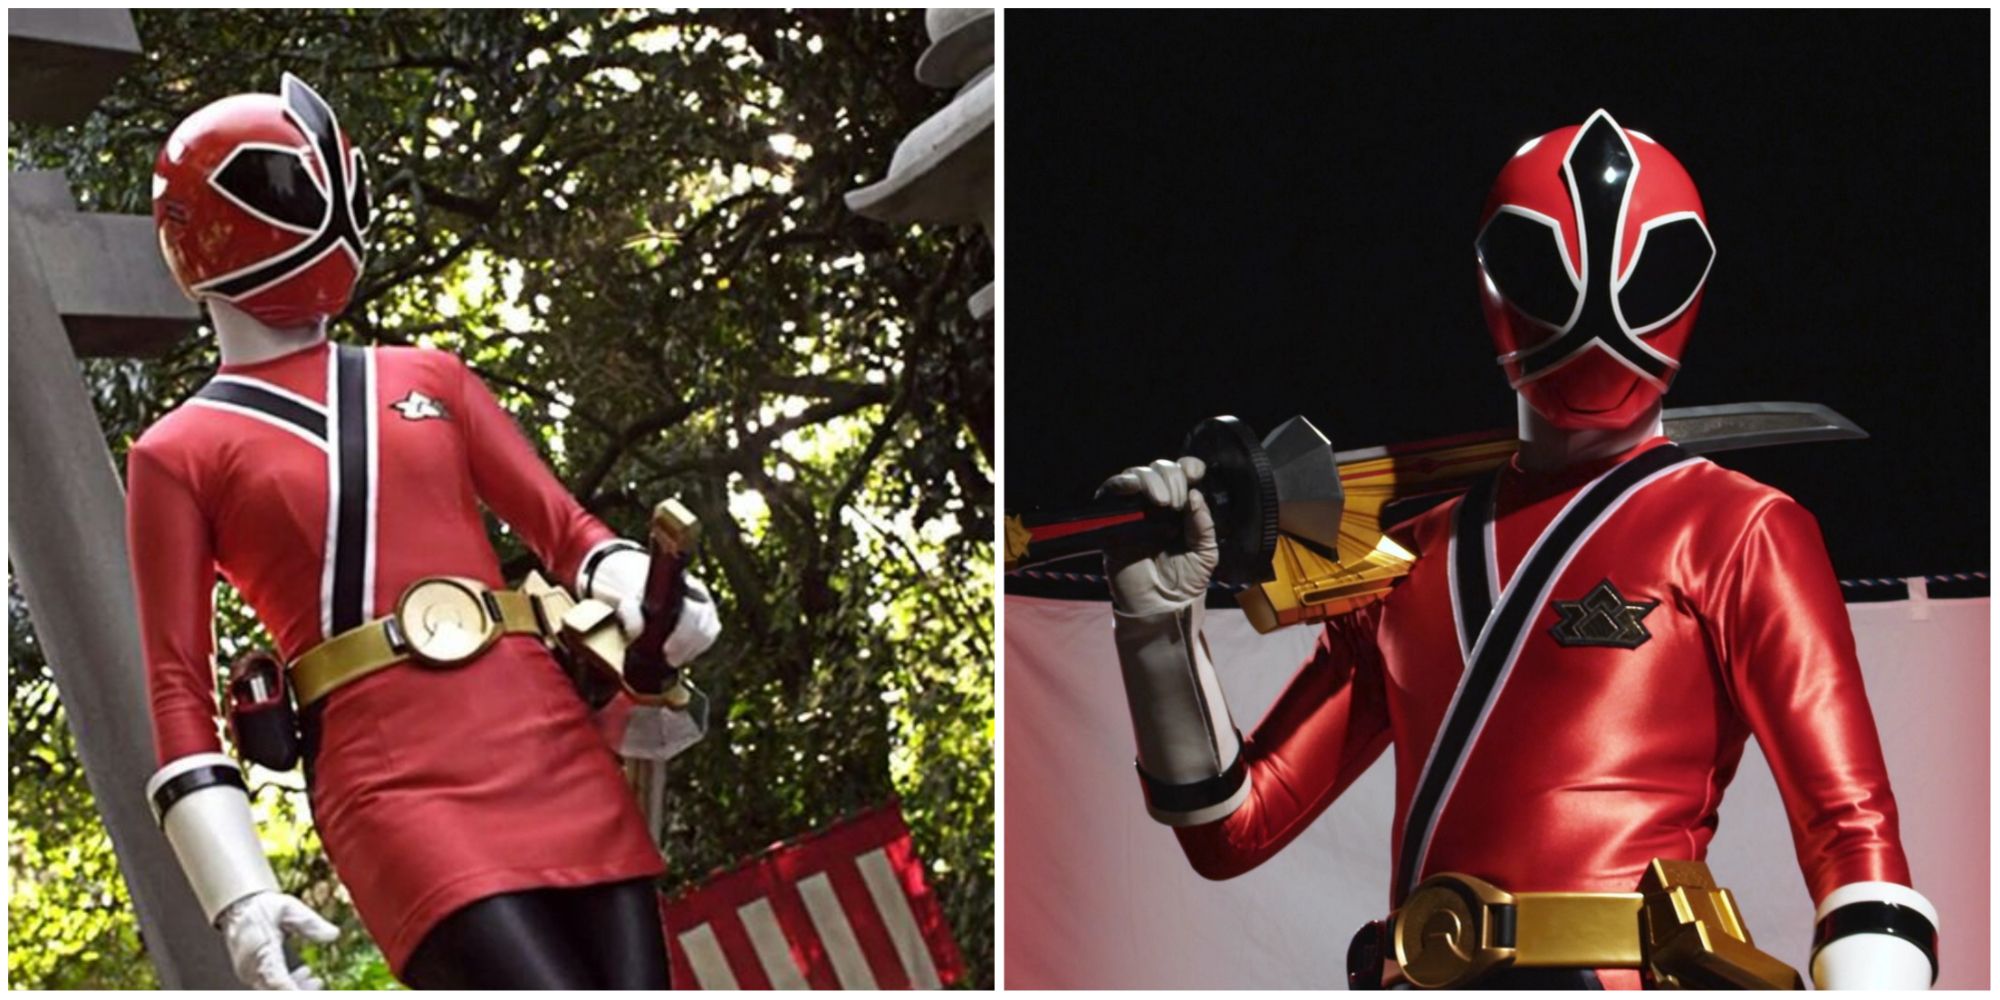 The Two red Samurai Power Rangers